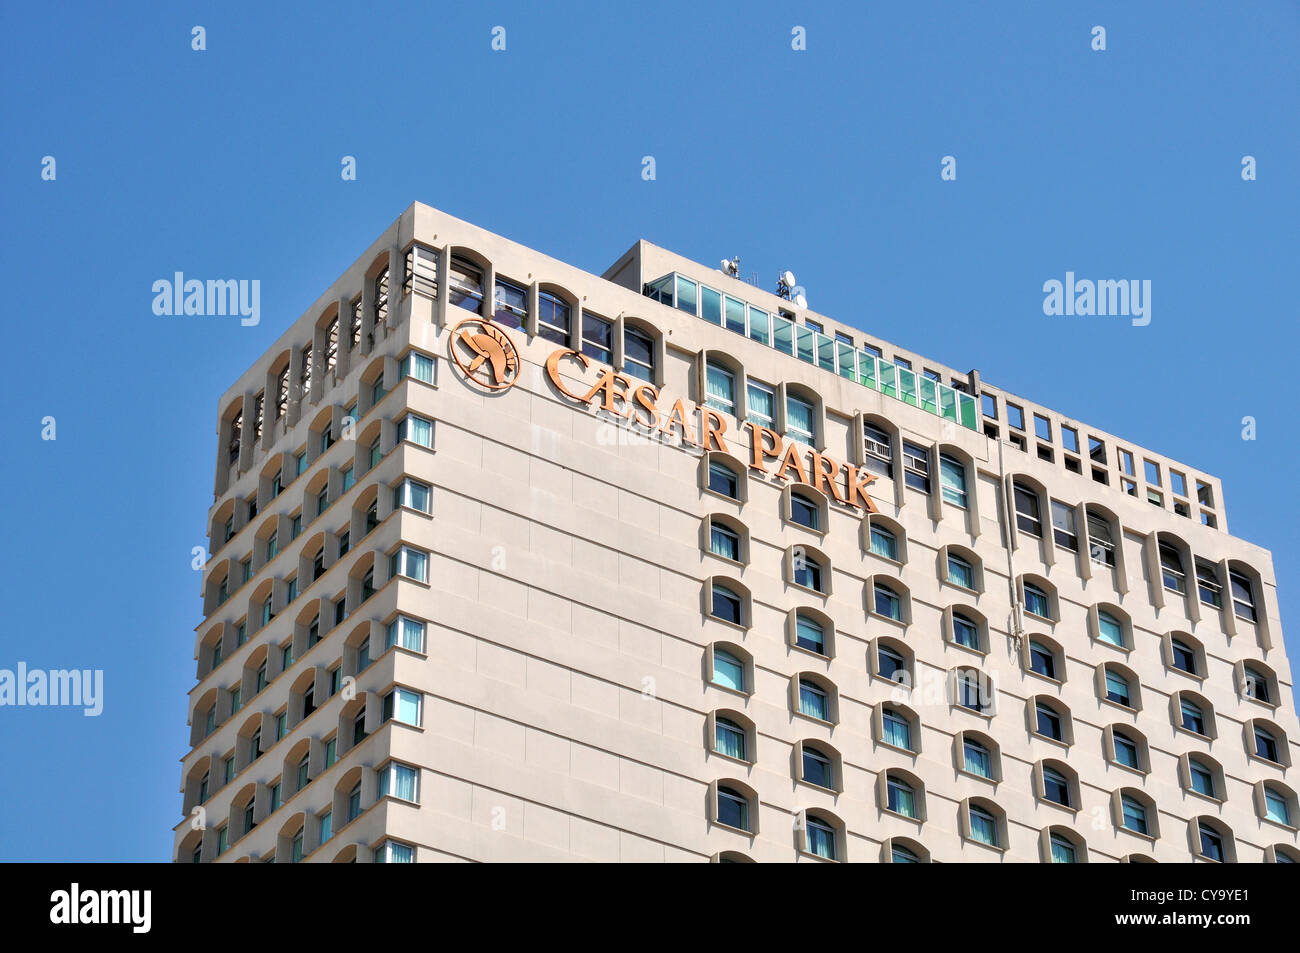 Caesar park hotel Ipanema Rio de Janeiro Brazil Stock Photo - Alamy